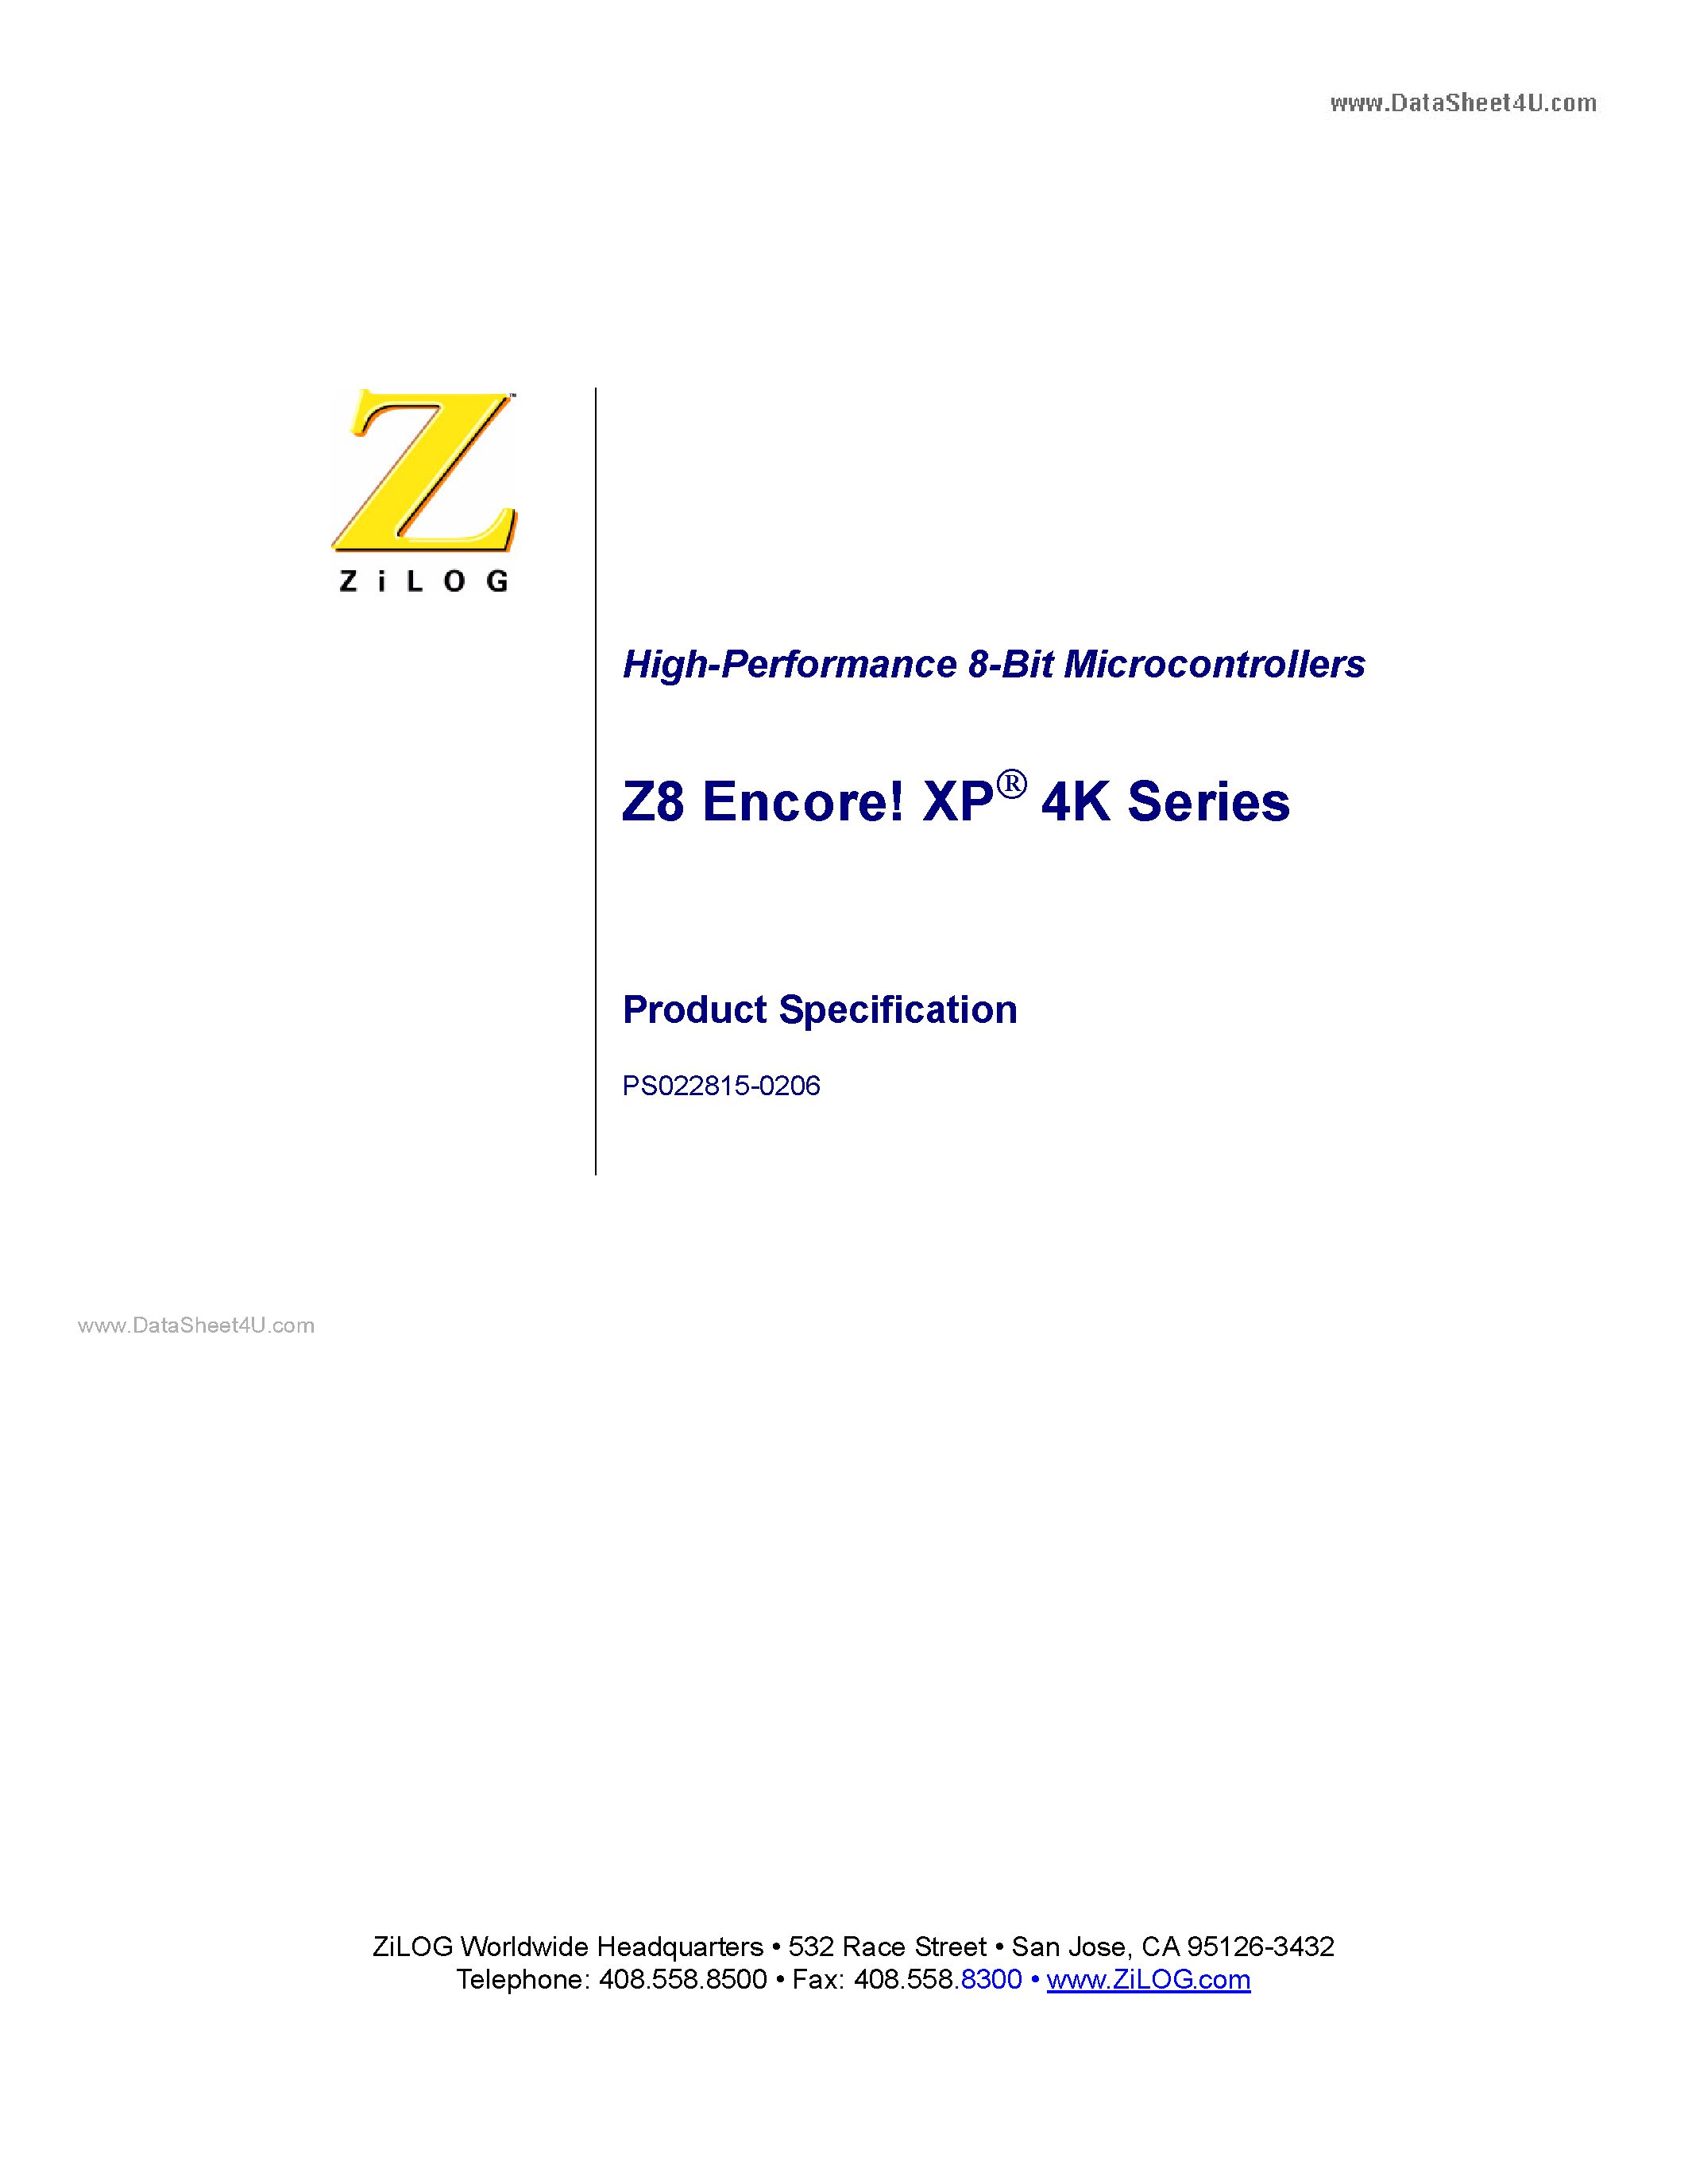 Даташит Z8F011A - Z8 Encore XP-R 4K Series High-Performance 8-Bit Microcontrollers страница 1